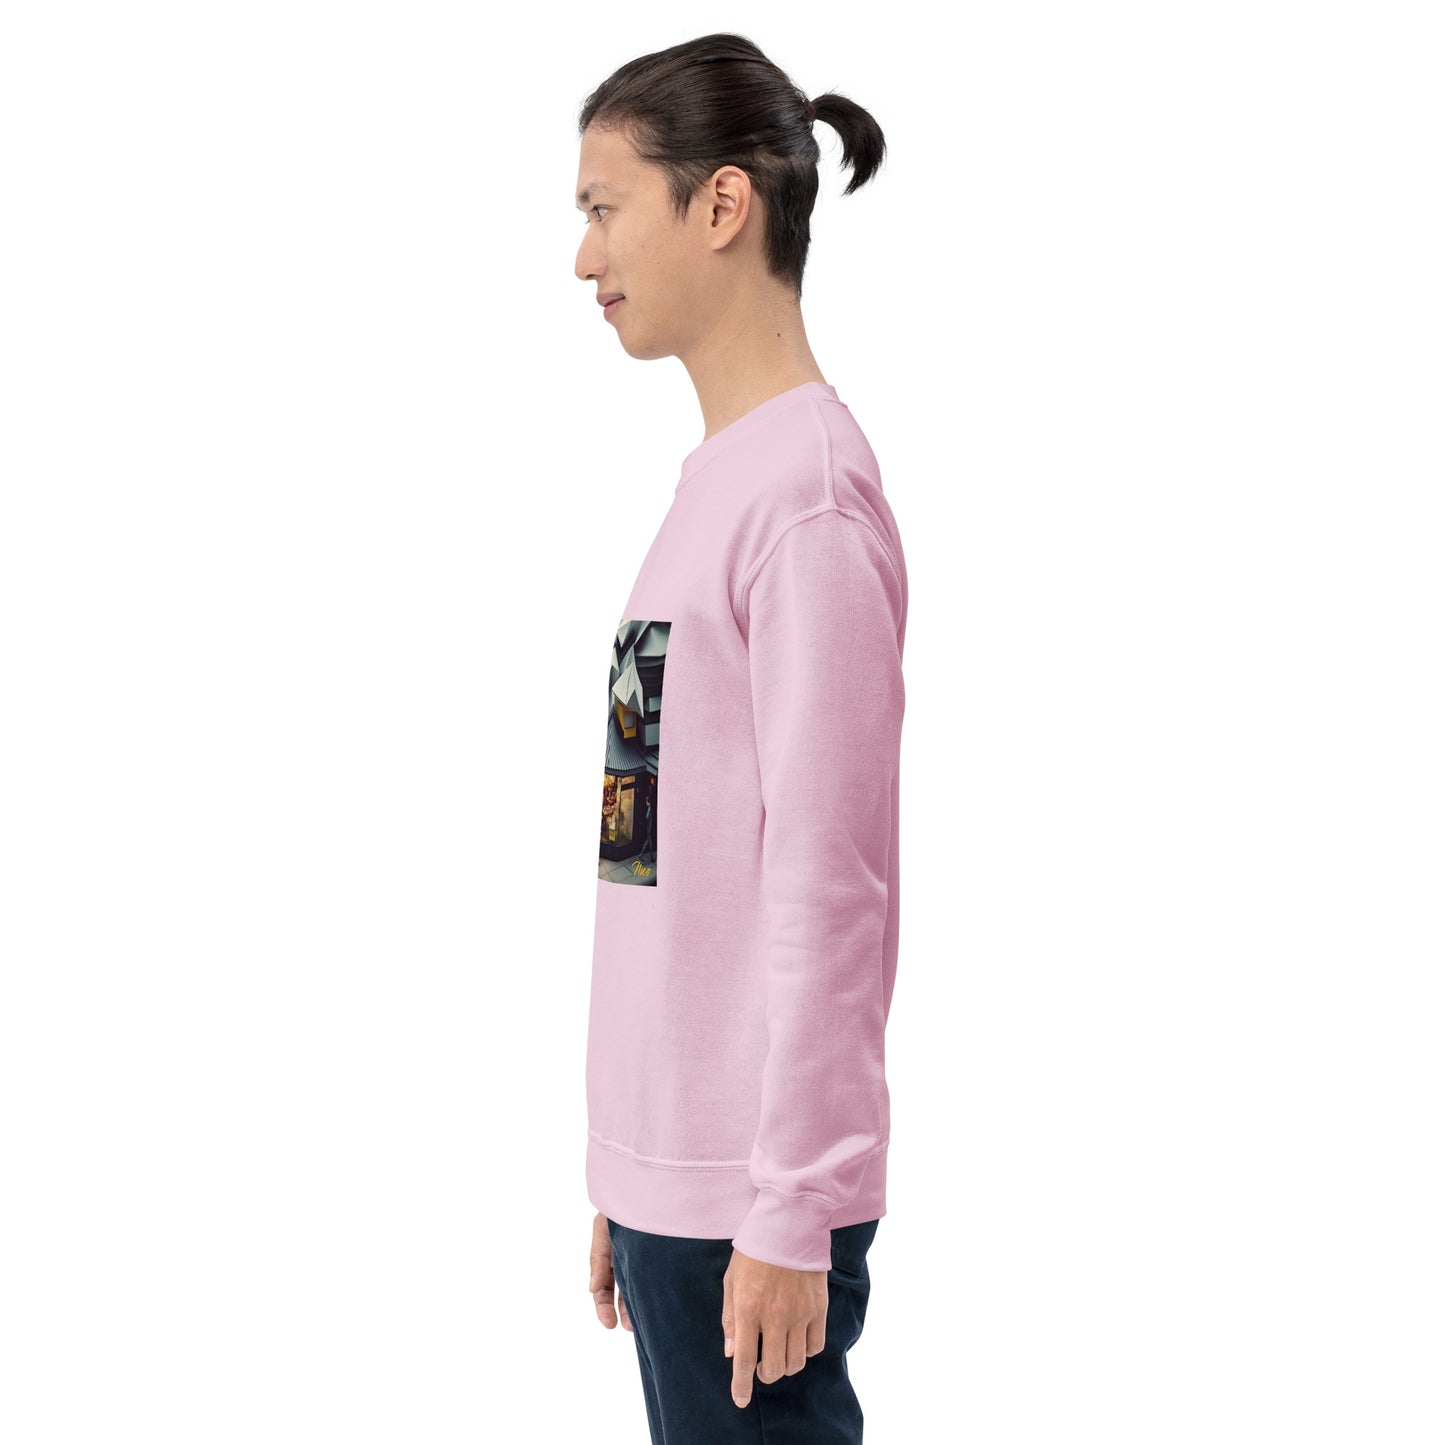 Oriental Rain Series Print #3 - Unisex Sweatshirt